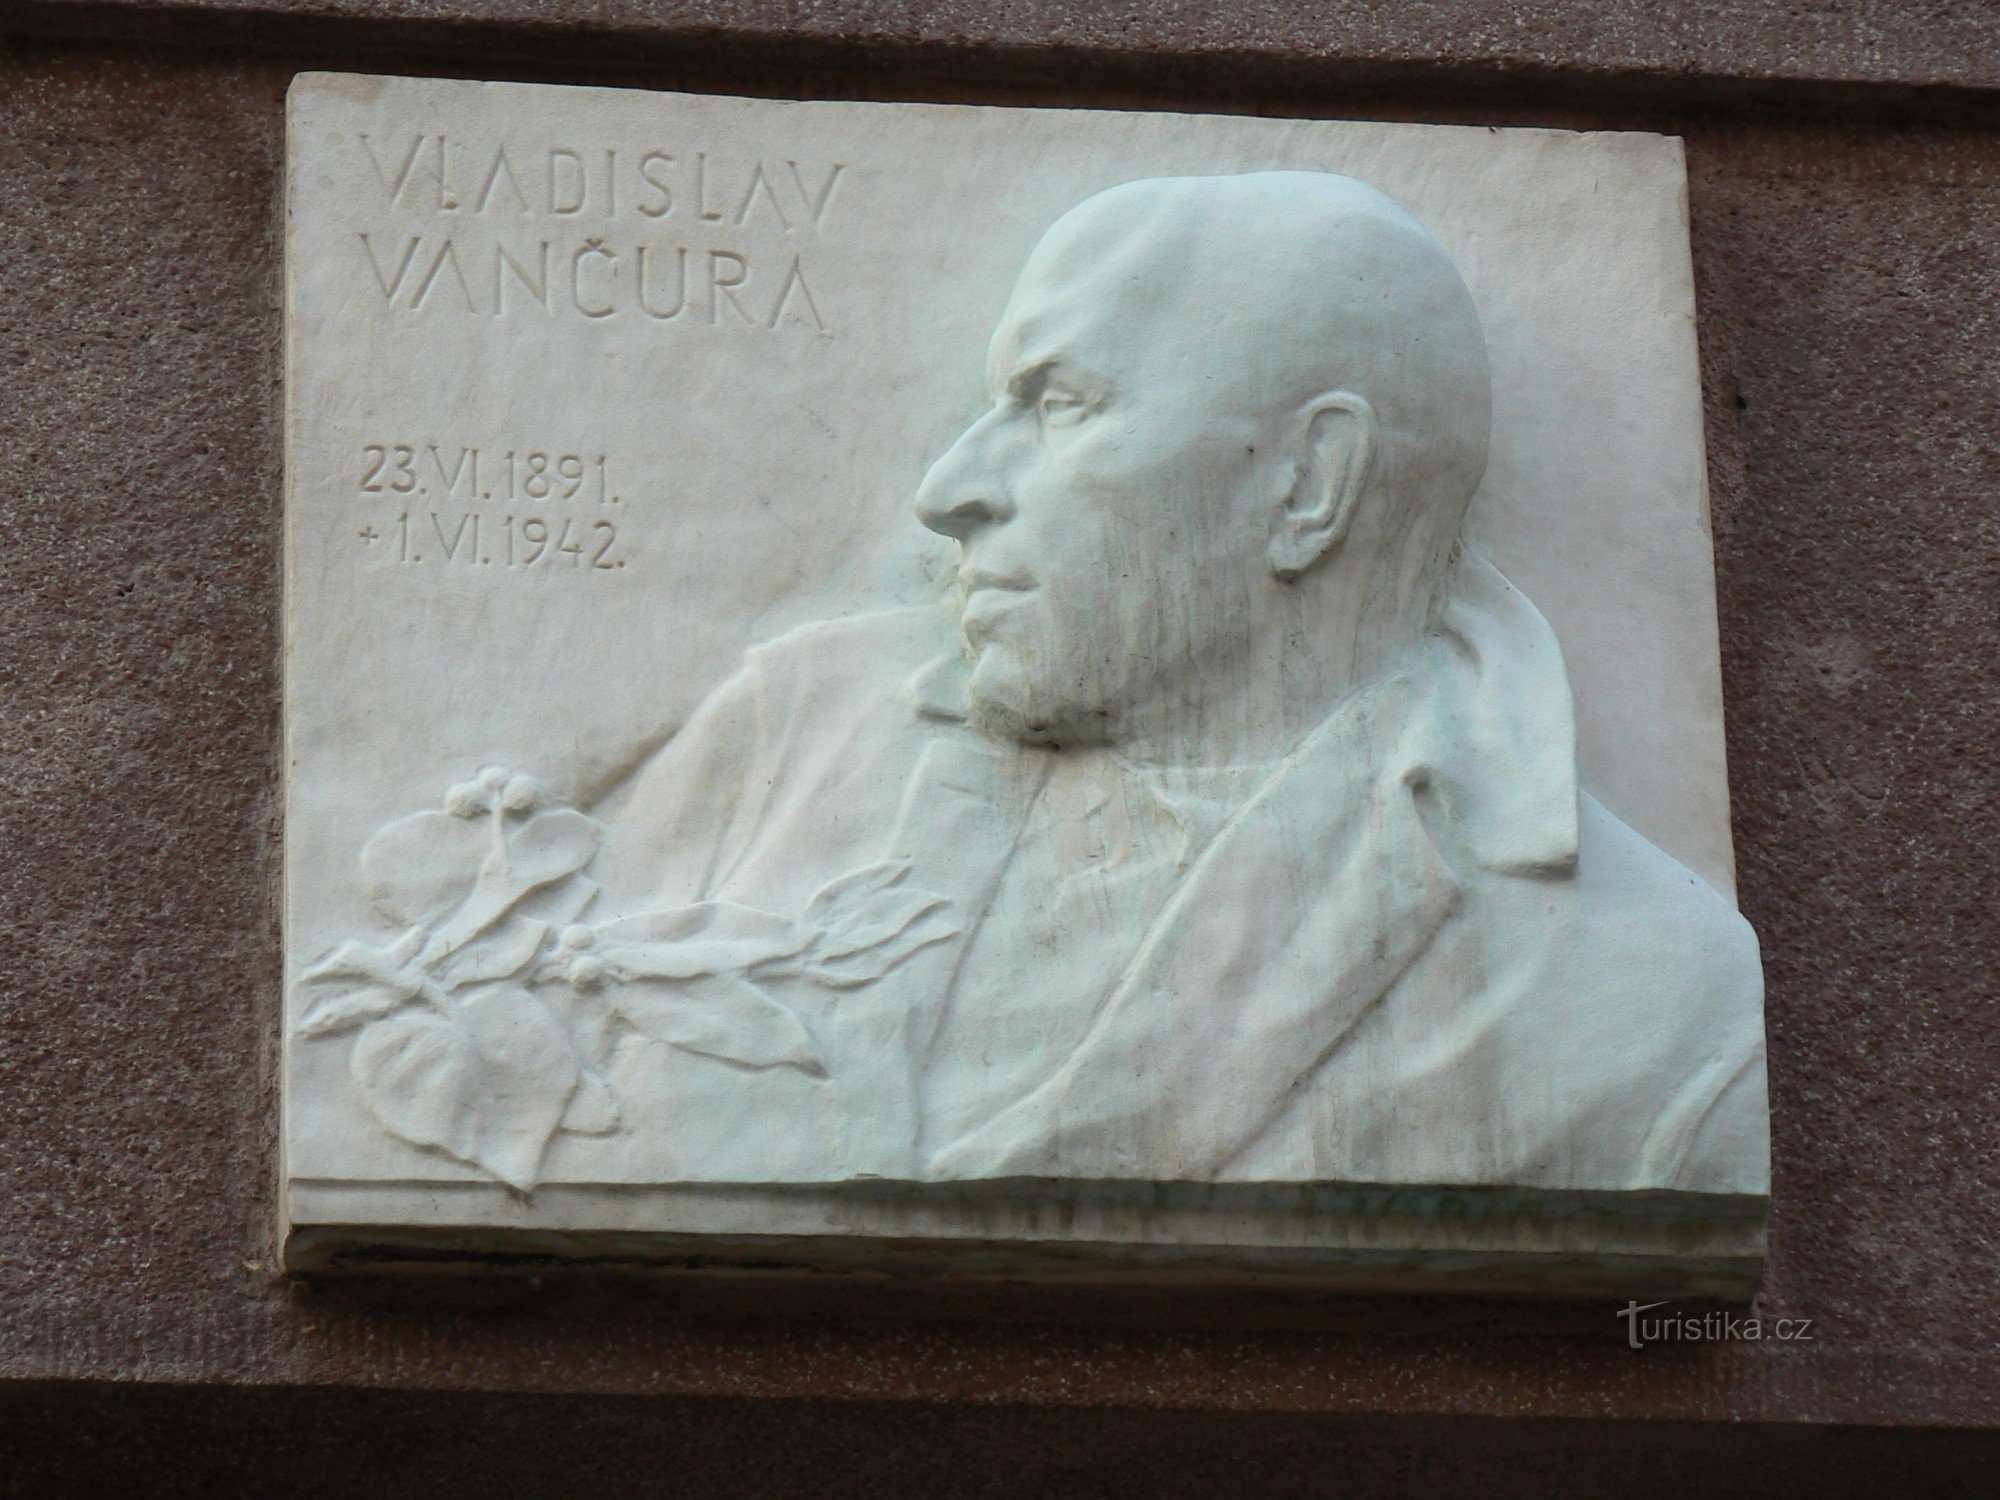 Vladislav Vančura minnestavla